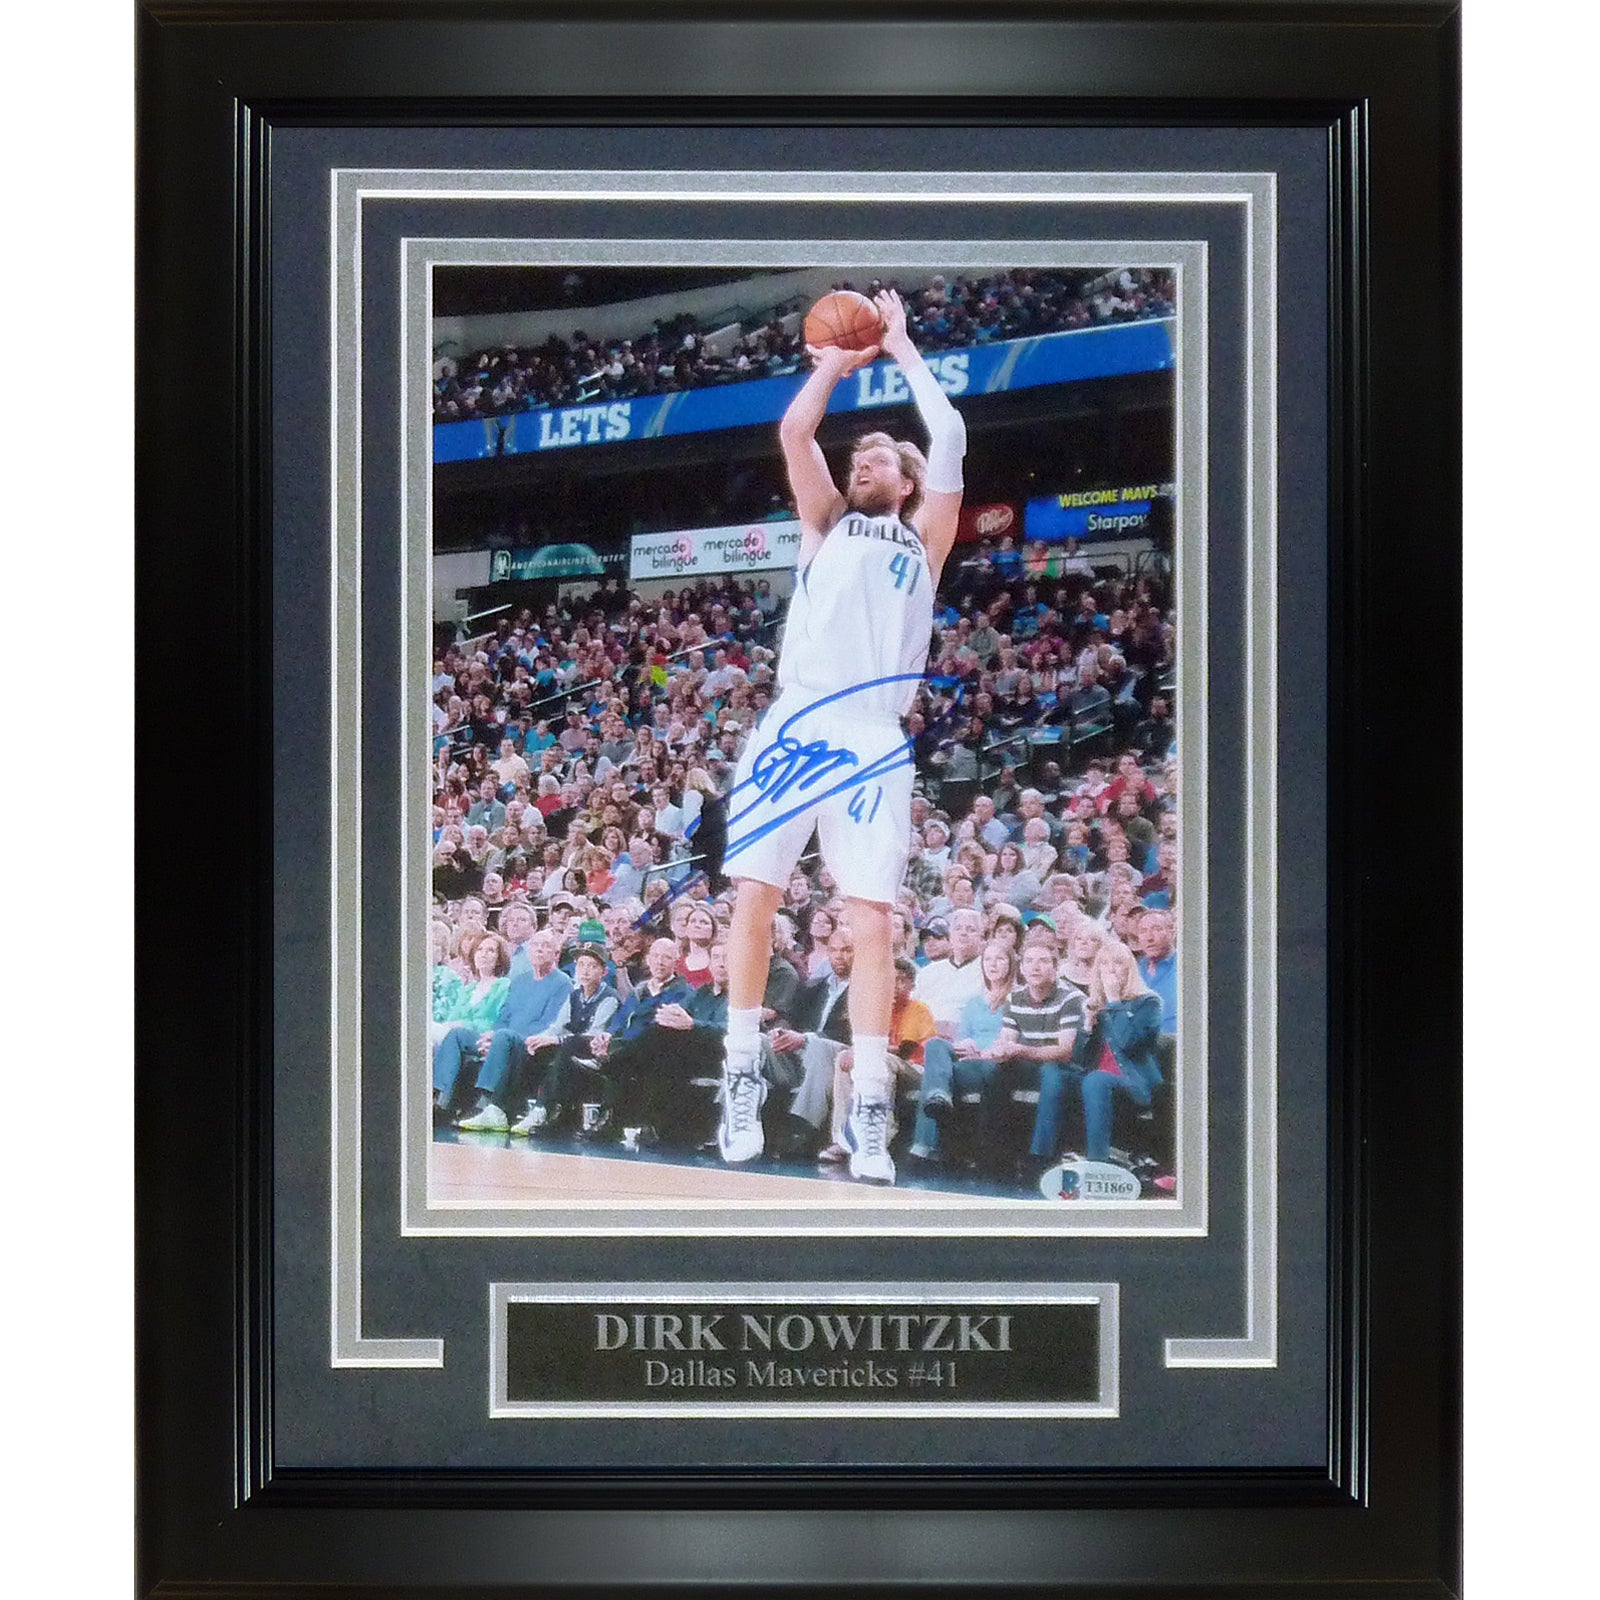 Dirk Nowitzki Autographed Dallas Mavericks Framed 8x10 Photo - JSA